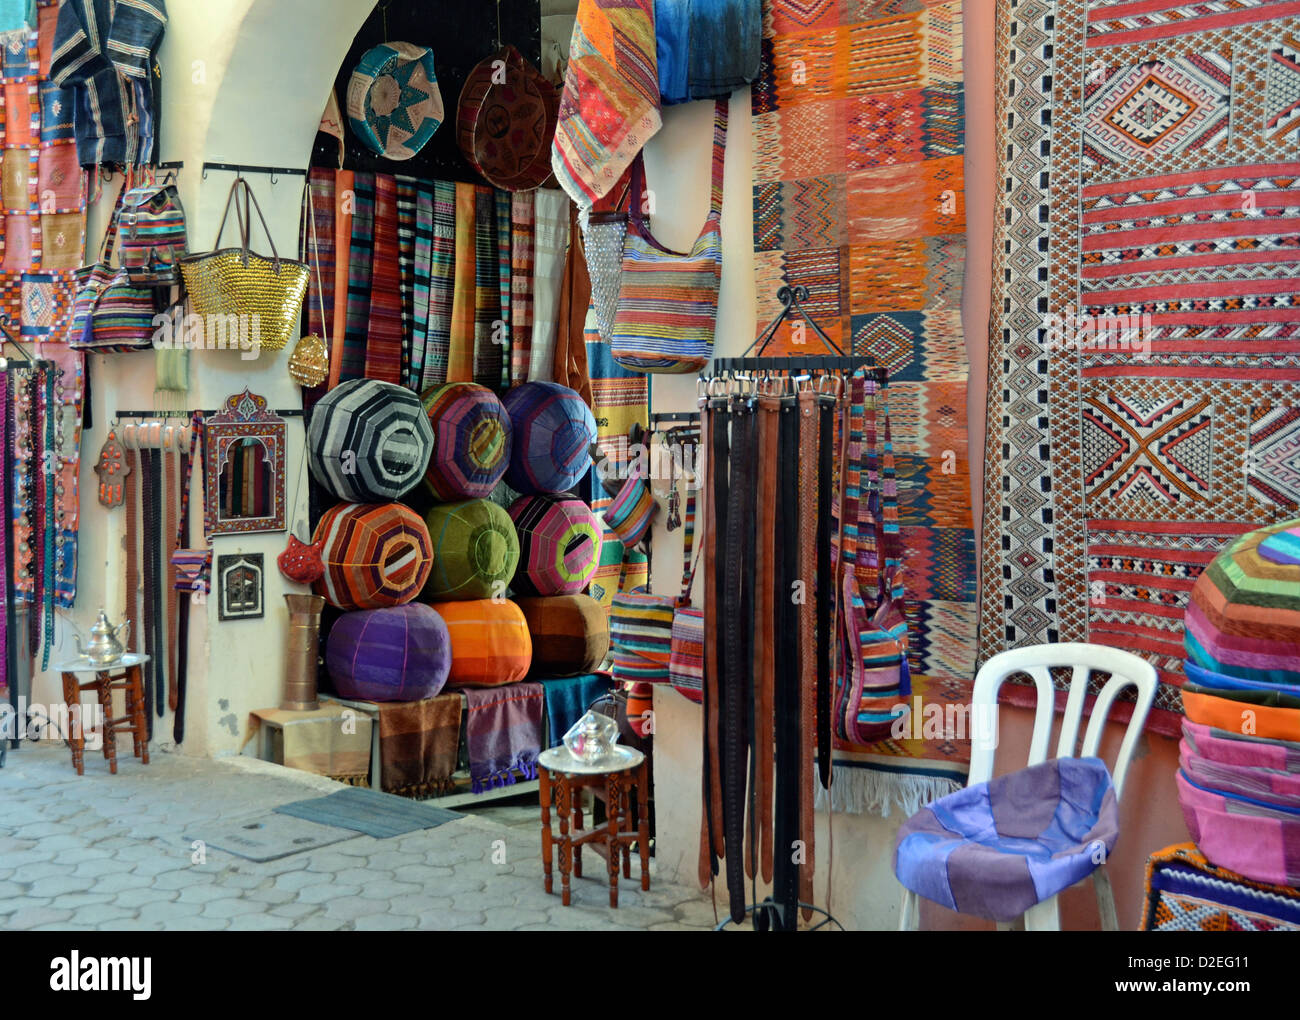 Rug and fabric shop, Marrakech, Morocco Stock Photo